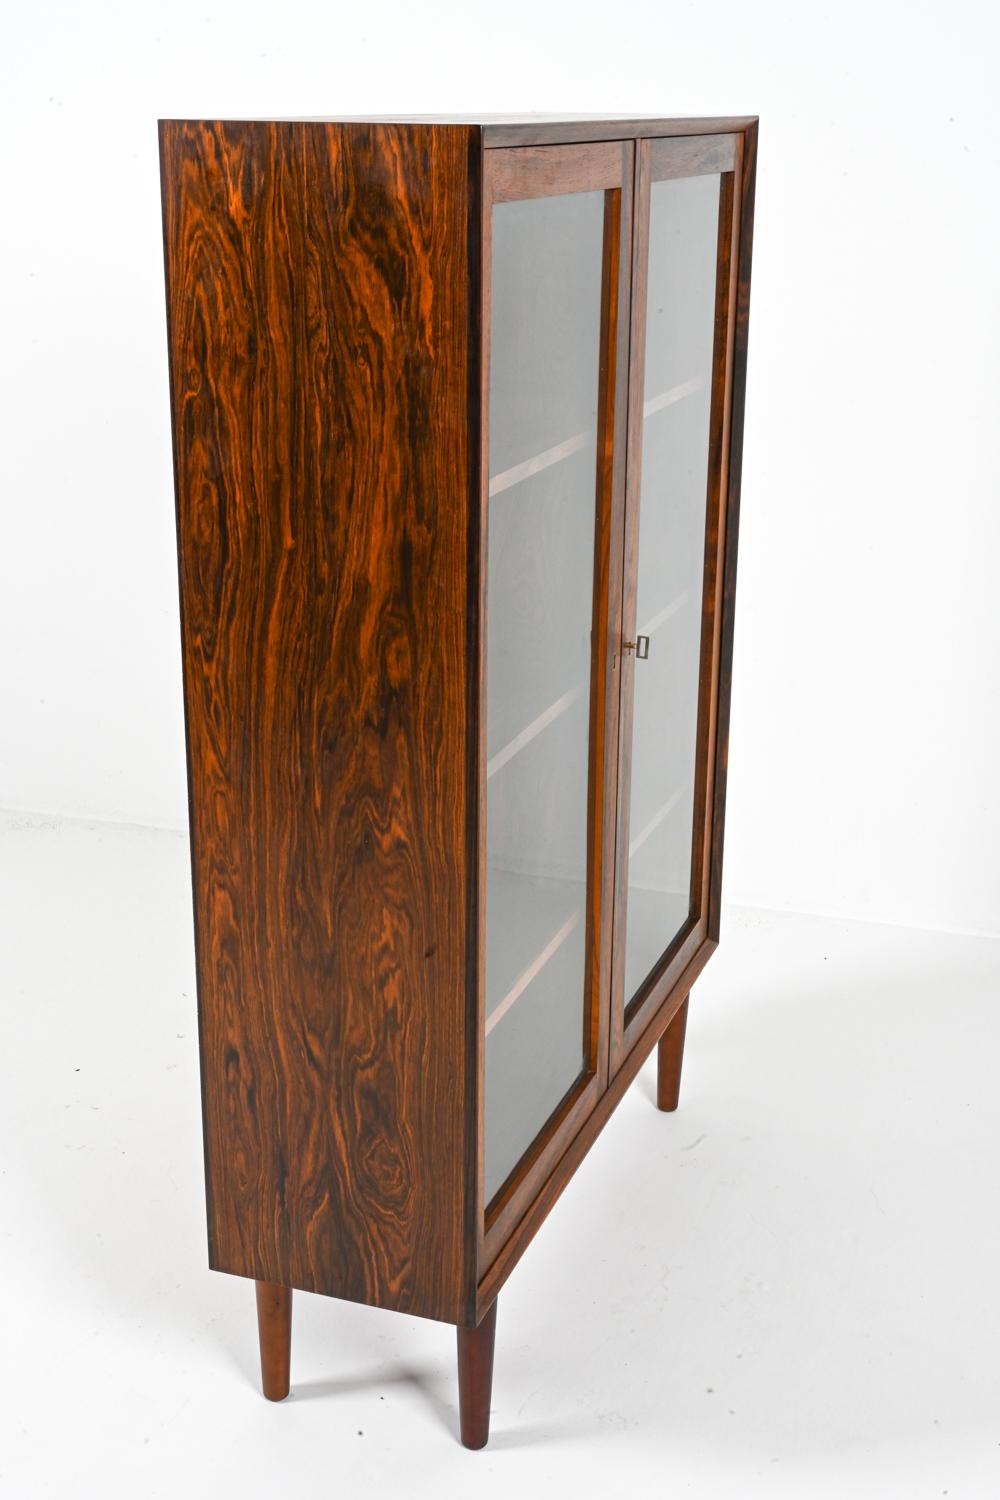 Erik Brouer Rosewood Display Cabinet, Denmark 1960s For Sale 7